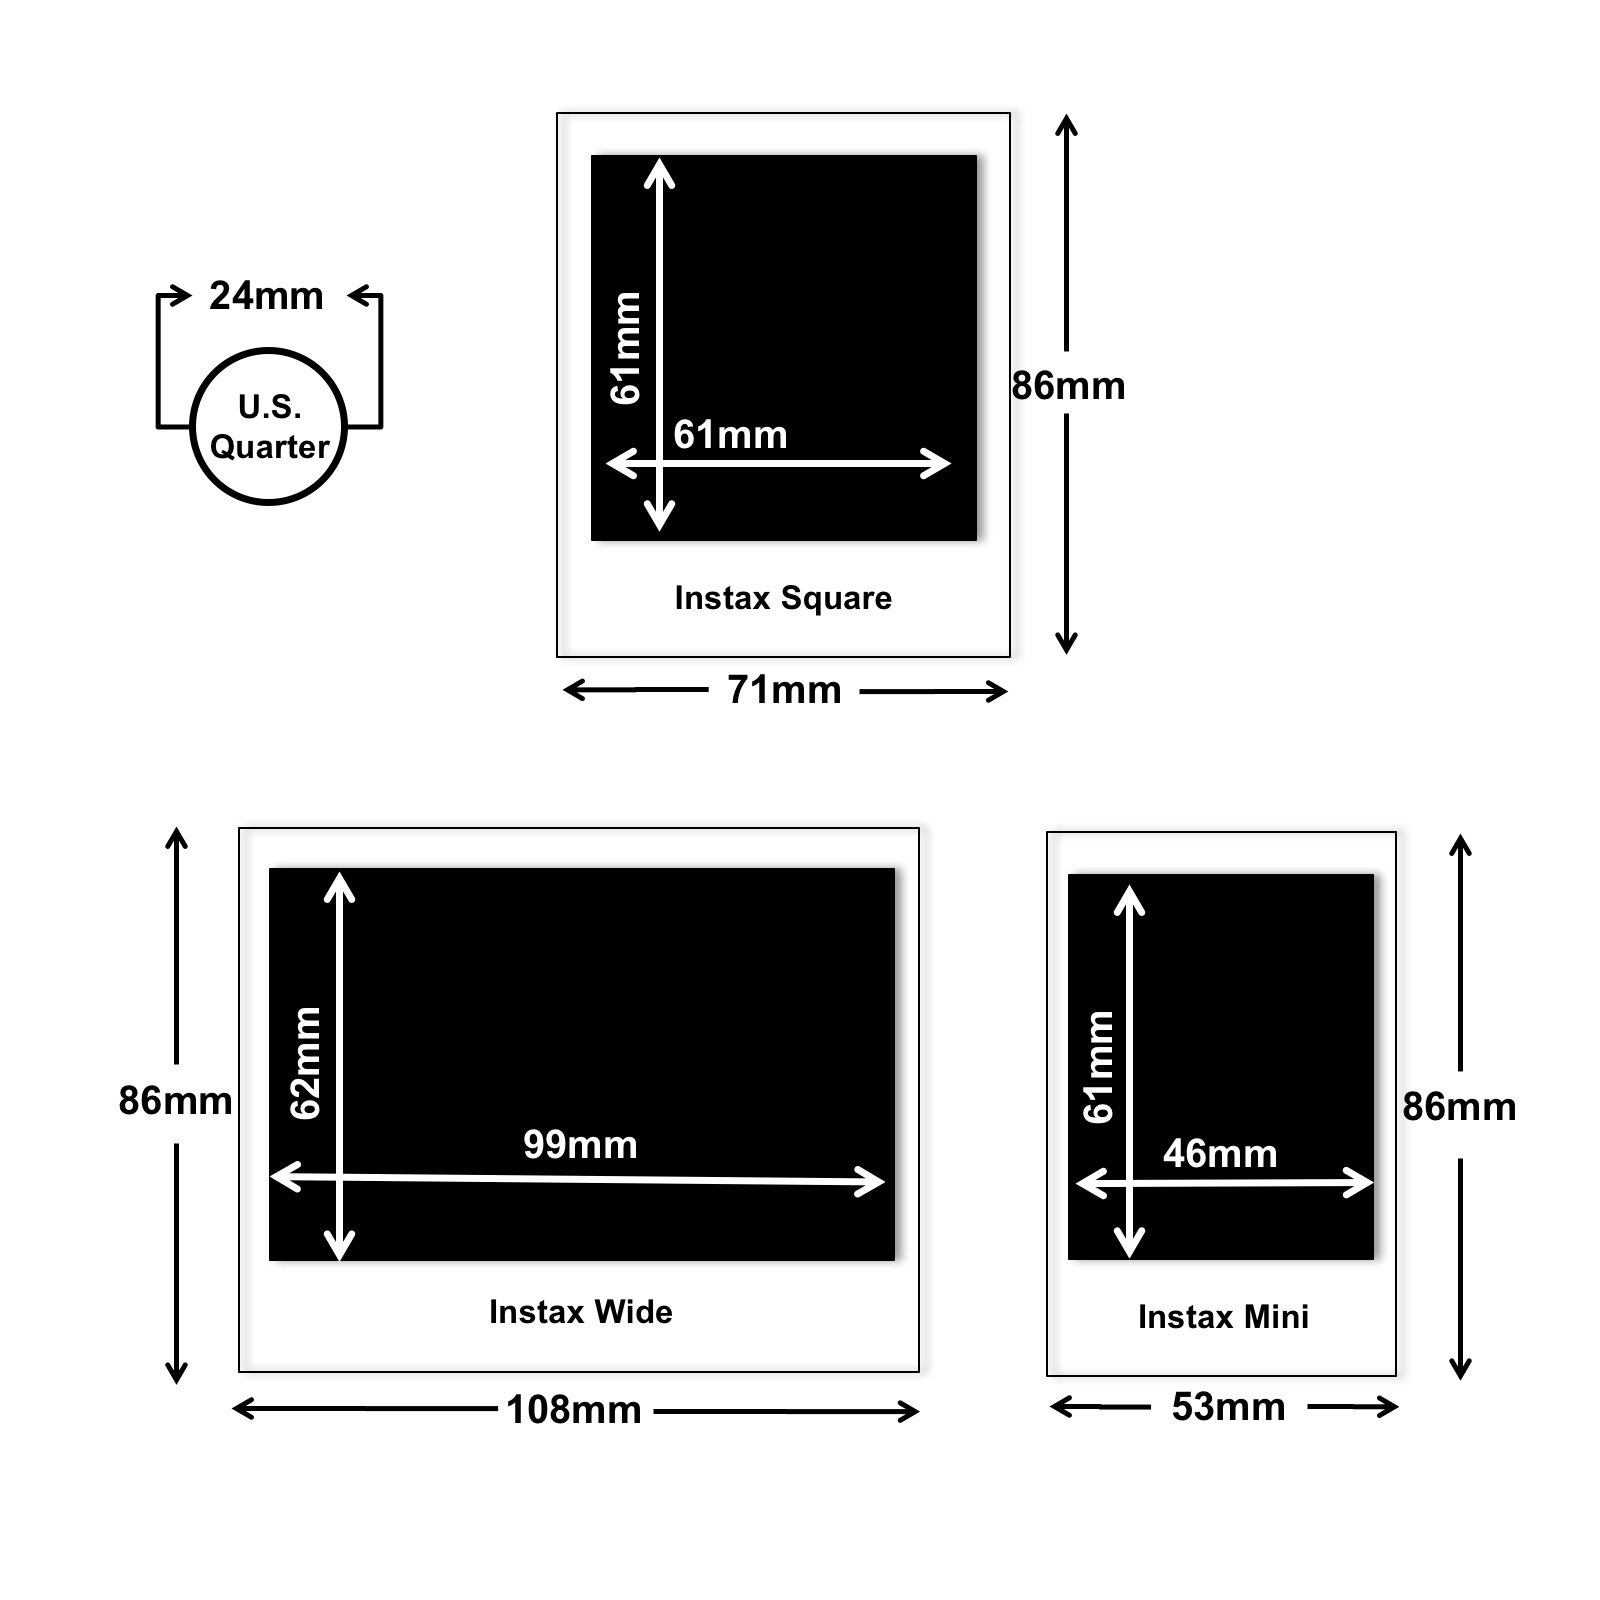 التميز الهريس الإتصال  Fujifilm Instax Photo Size (Mini vs. Square vs. Wide) — EVERYTHING INSTAX -  Instax Camera Reviews & More